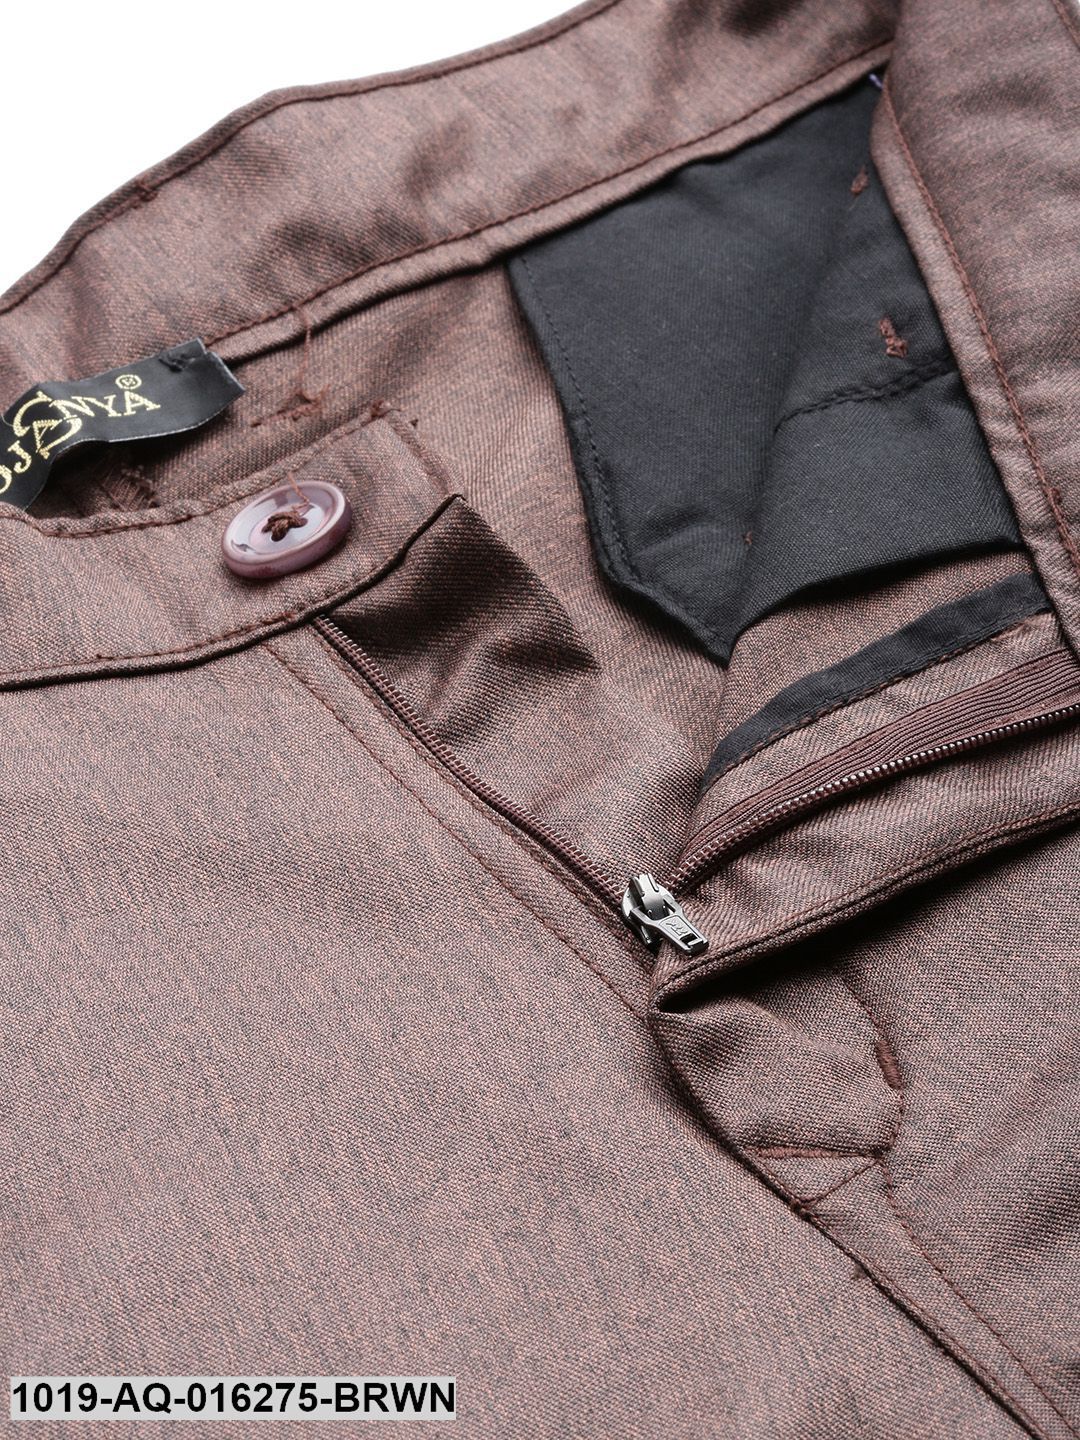 Men's Cotton Blend Brown Formal Trousers - Sojanya